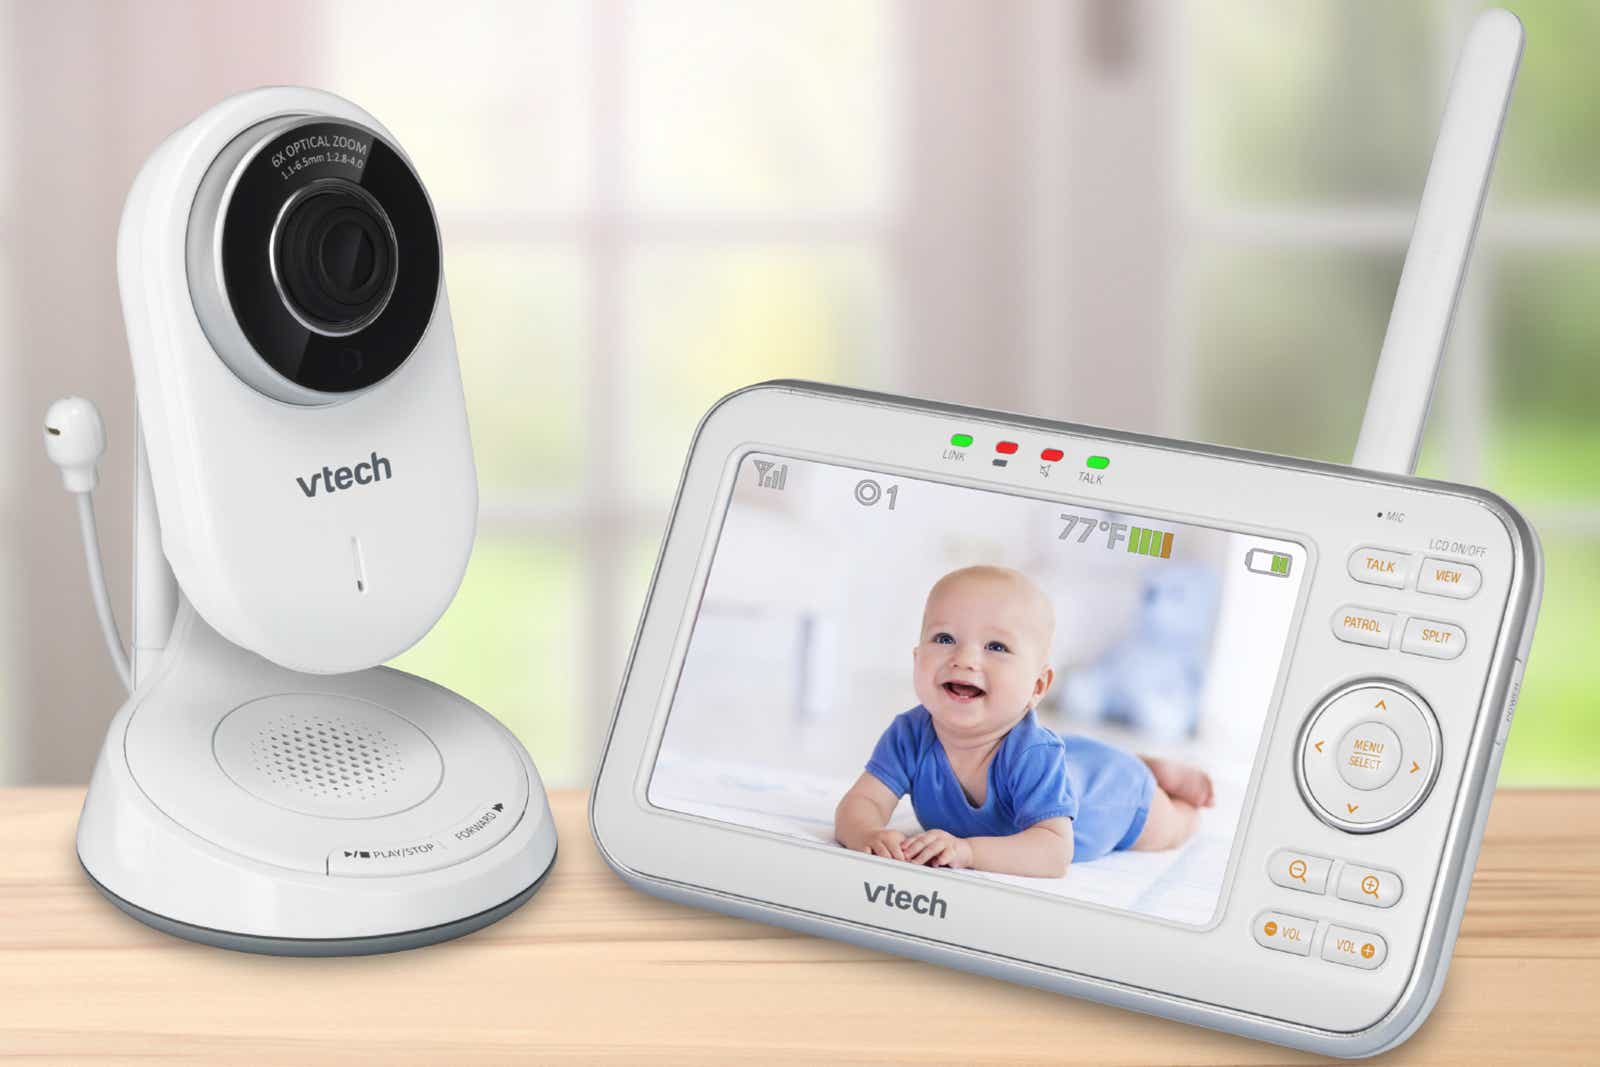 VTech VM5271 Expandable Digital Video Baby Monitor